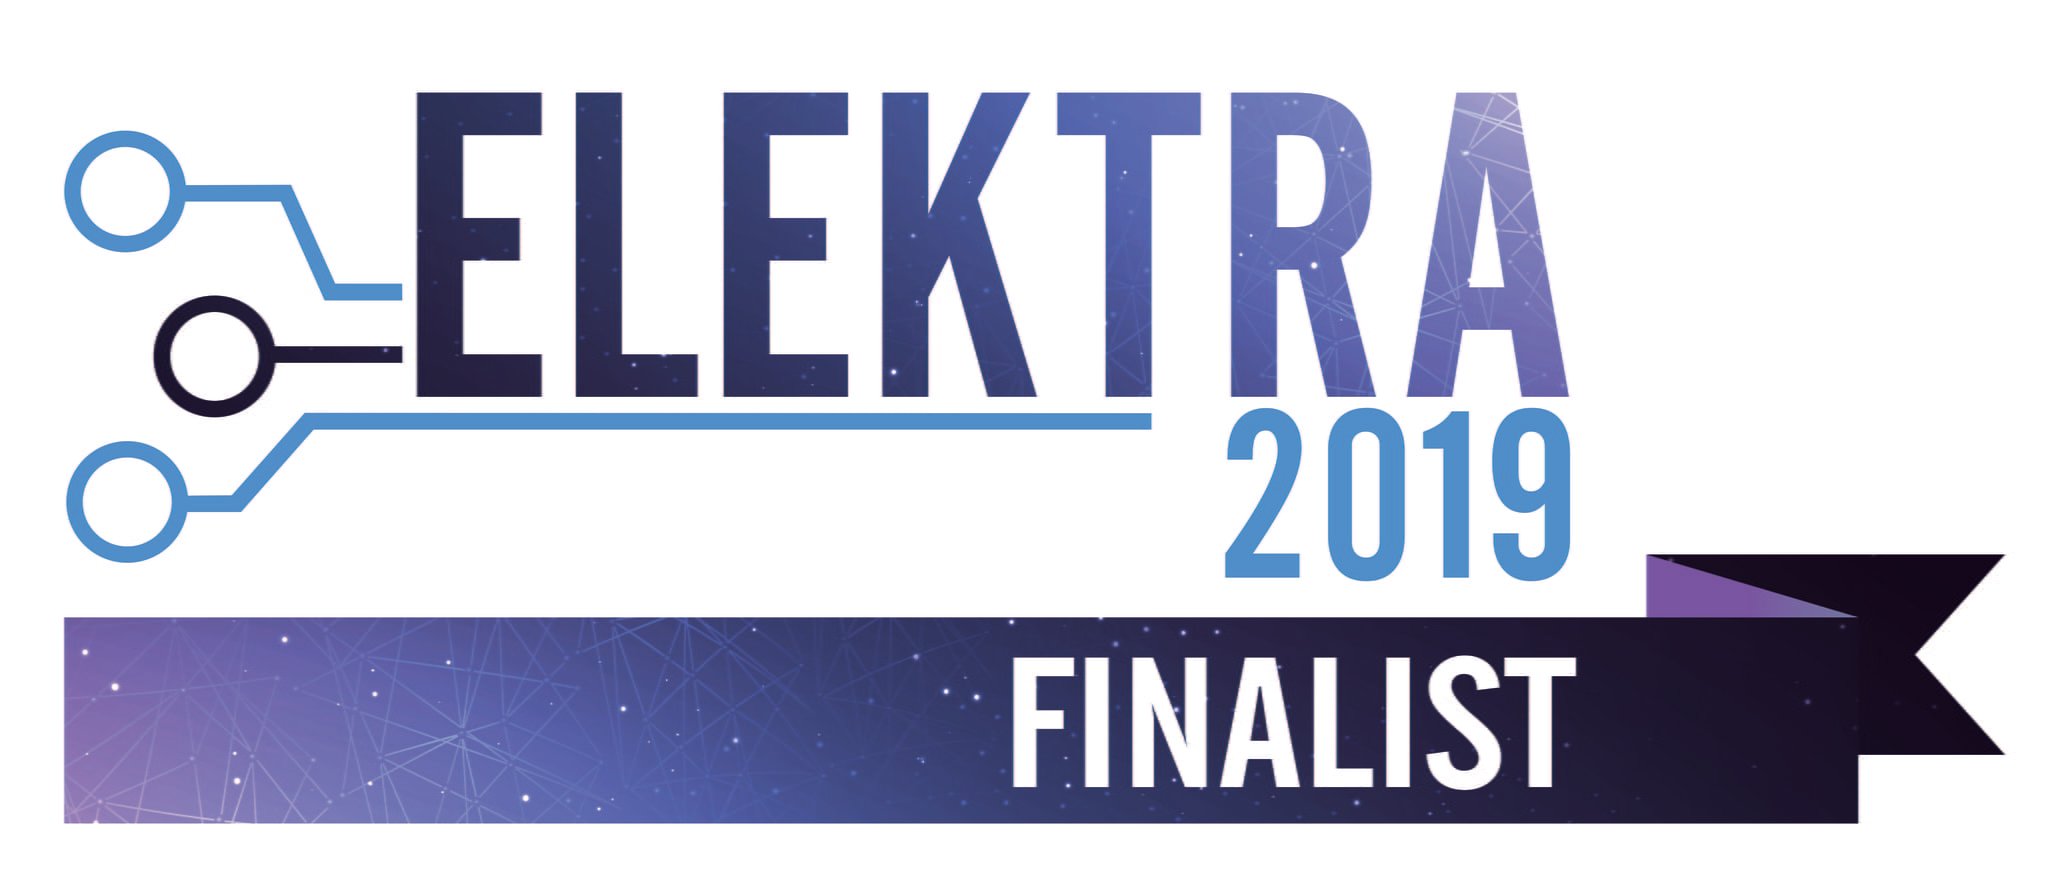 2019 Electronics Weekly Elektra Awards finalist